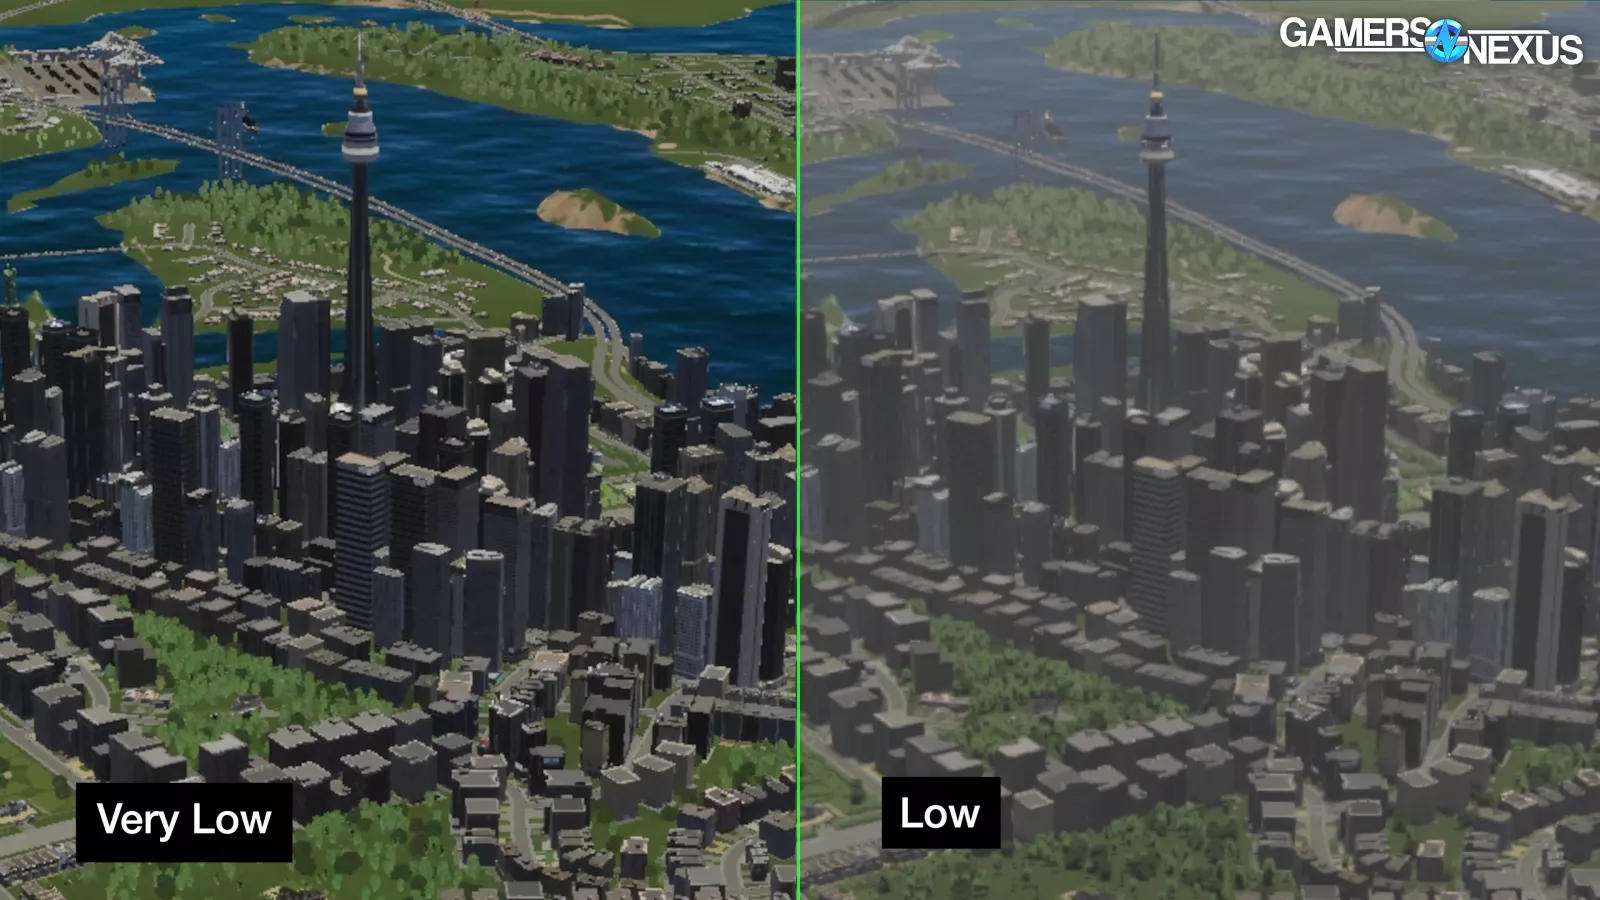 Cities Skylines 2 review – bigger, not better